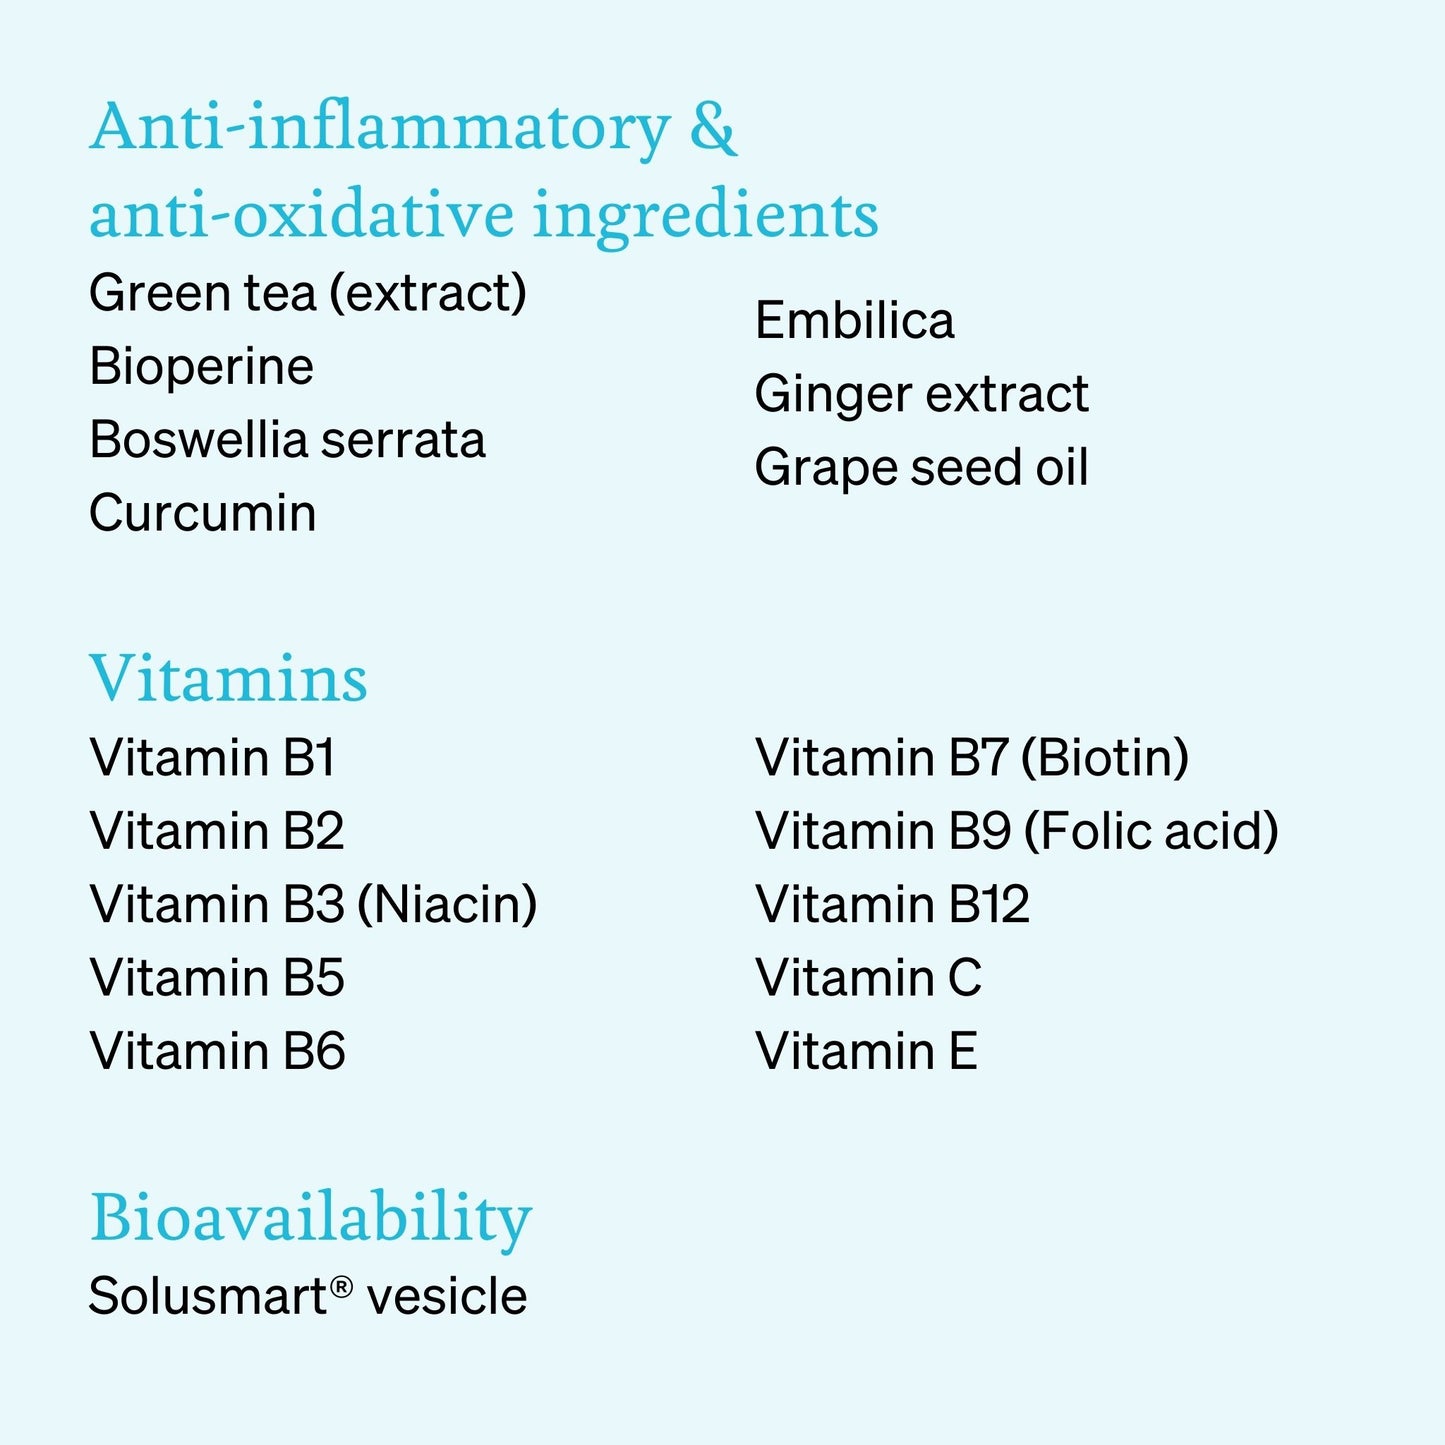 iüVitalizer ingredients by category